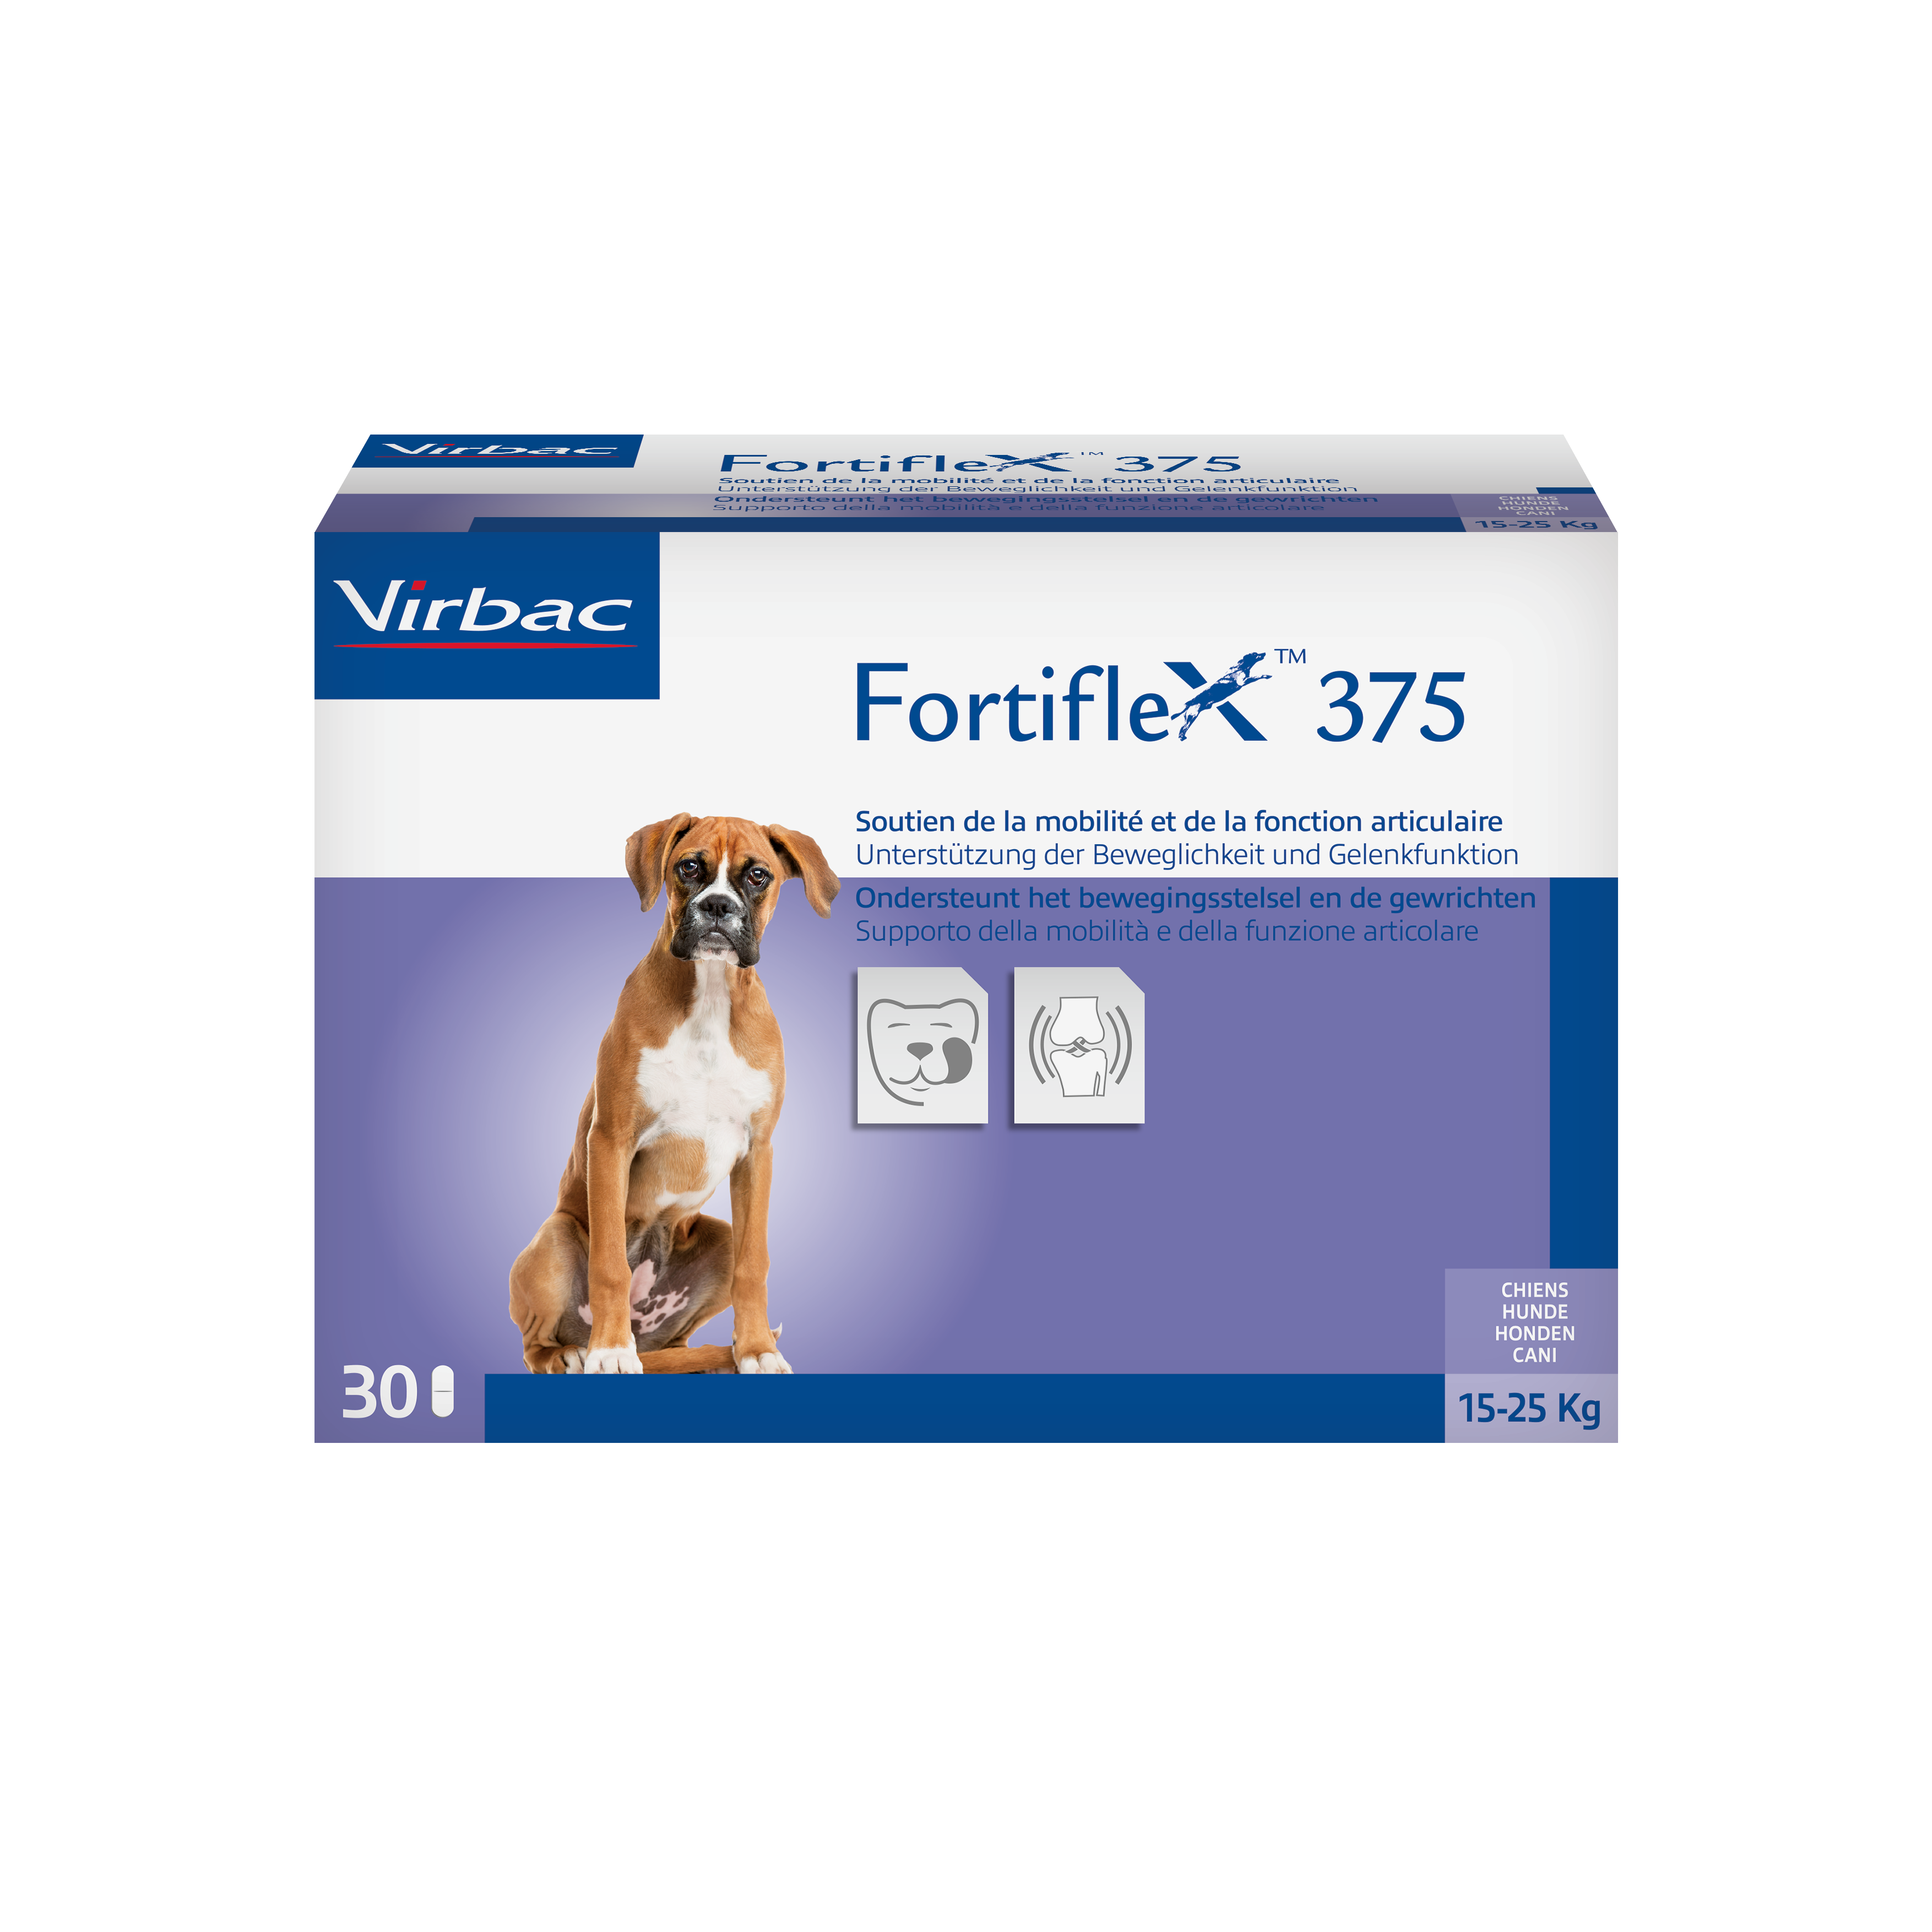 Fortiflex 375mg - Ergänzungsfuttermittel für Hunde